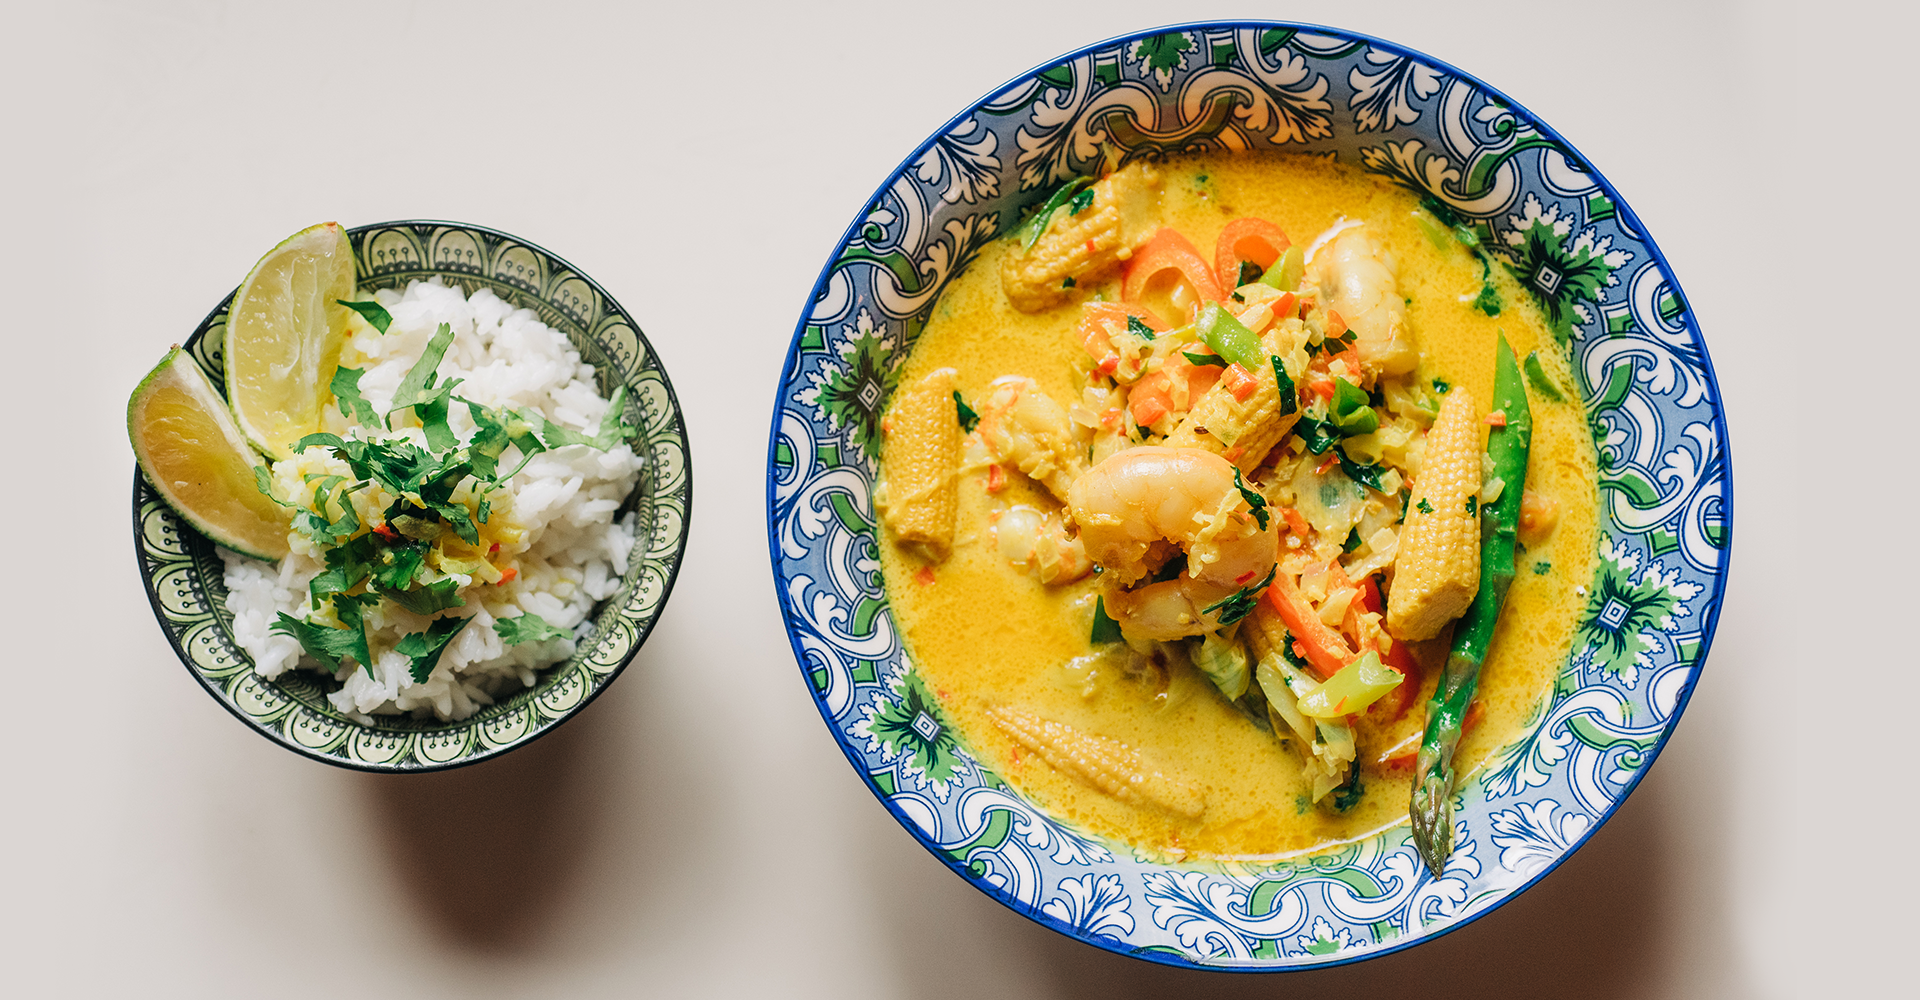 Curry stew με γαρίδες, λαχανικά και ρύζι basmati